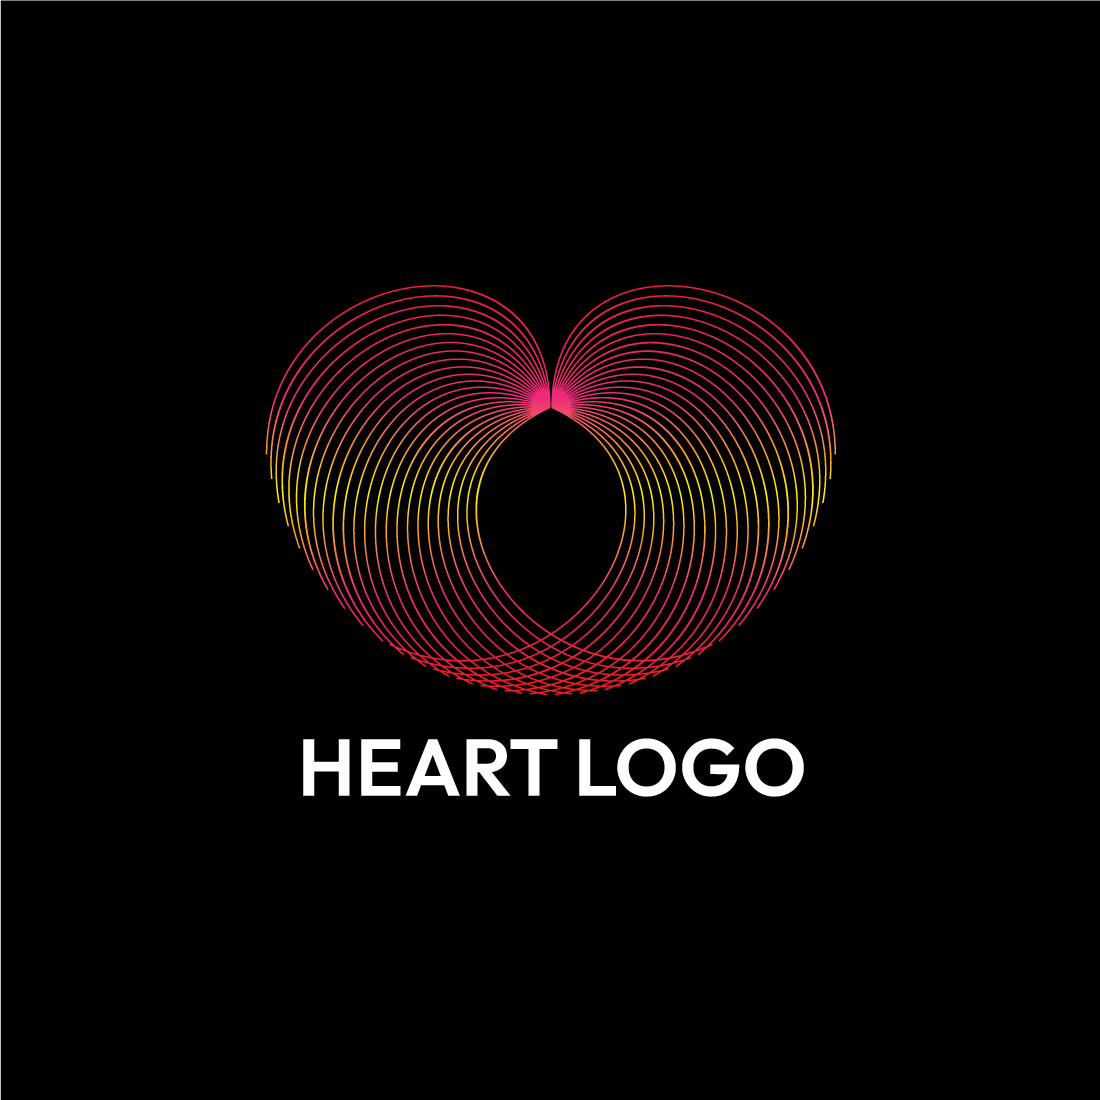 Elegant Line Art Heart: Love and Beauty Logo Design Bundle preview image.